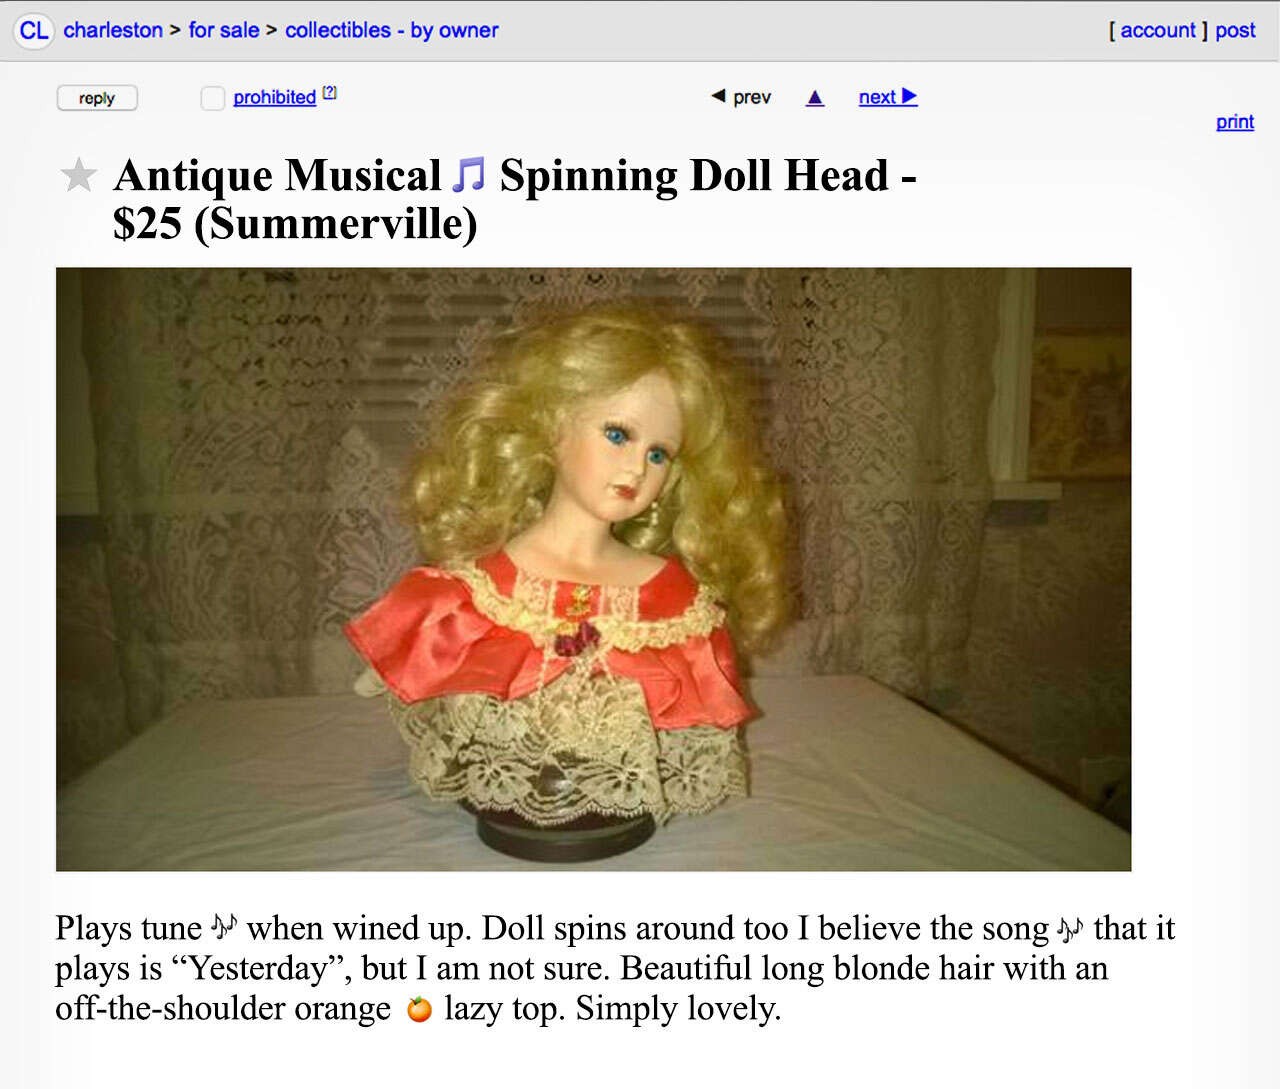 A Craigslist advertisement for an antique dolls. 